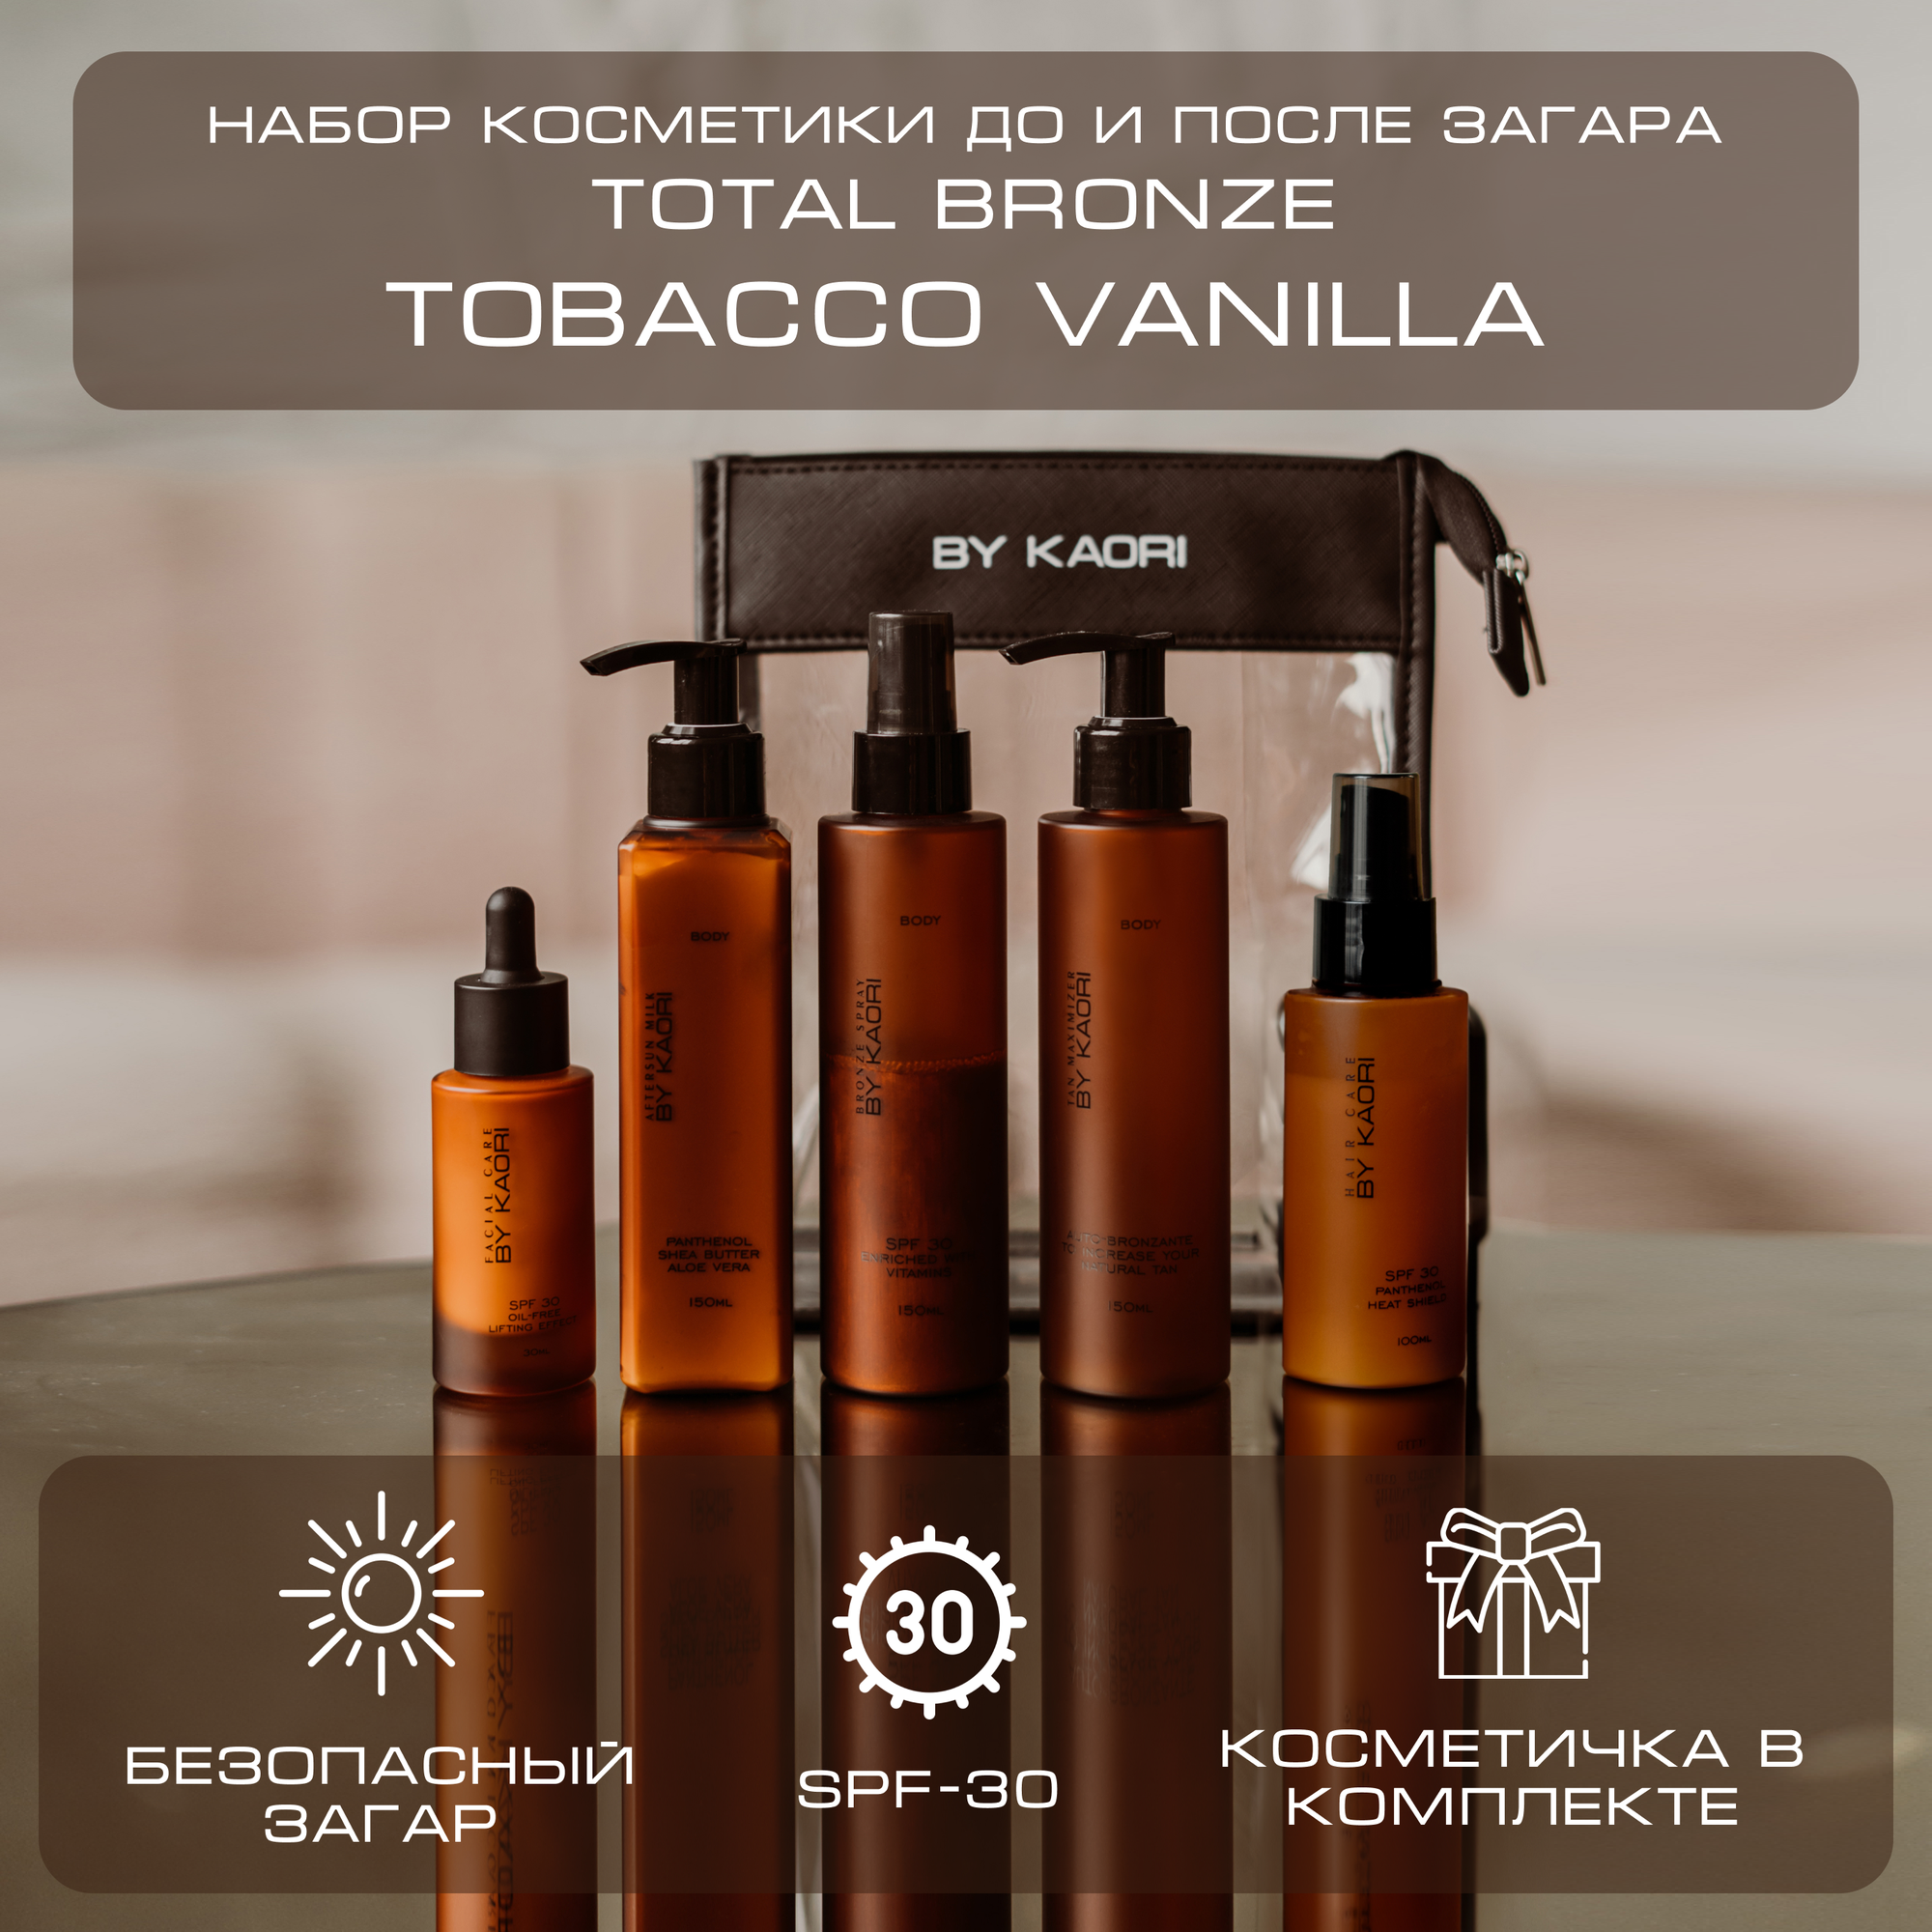 Набор косметики до и после загара By Kaori Total Bronze SPF-30, Tobacco Vanilla (Табак Ваниль)